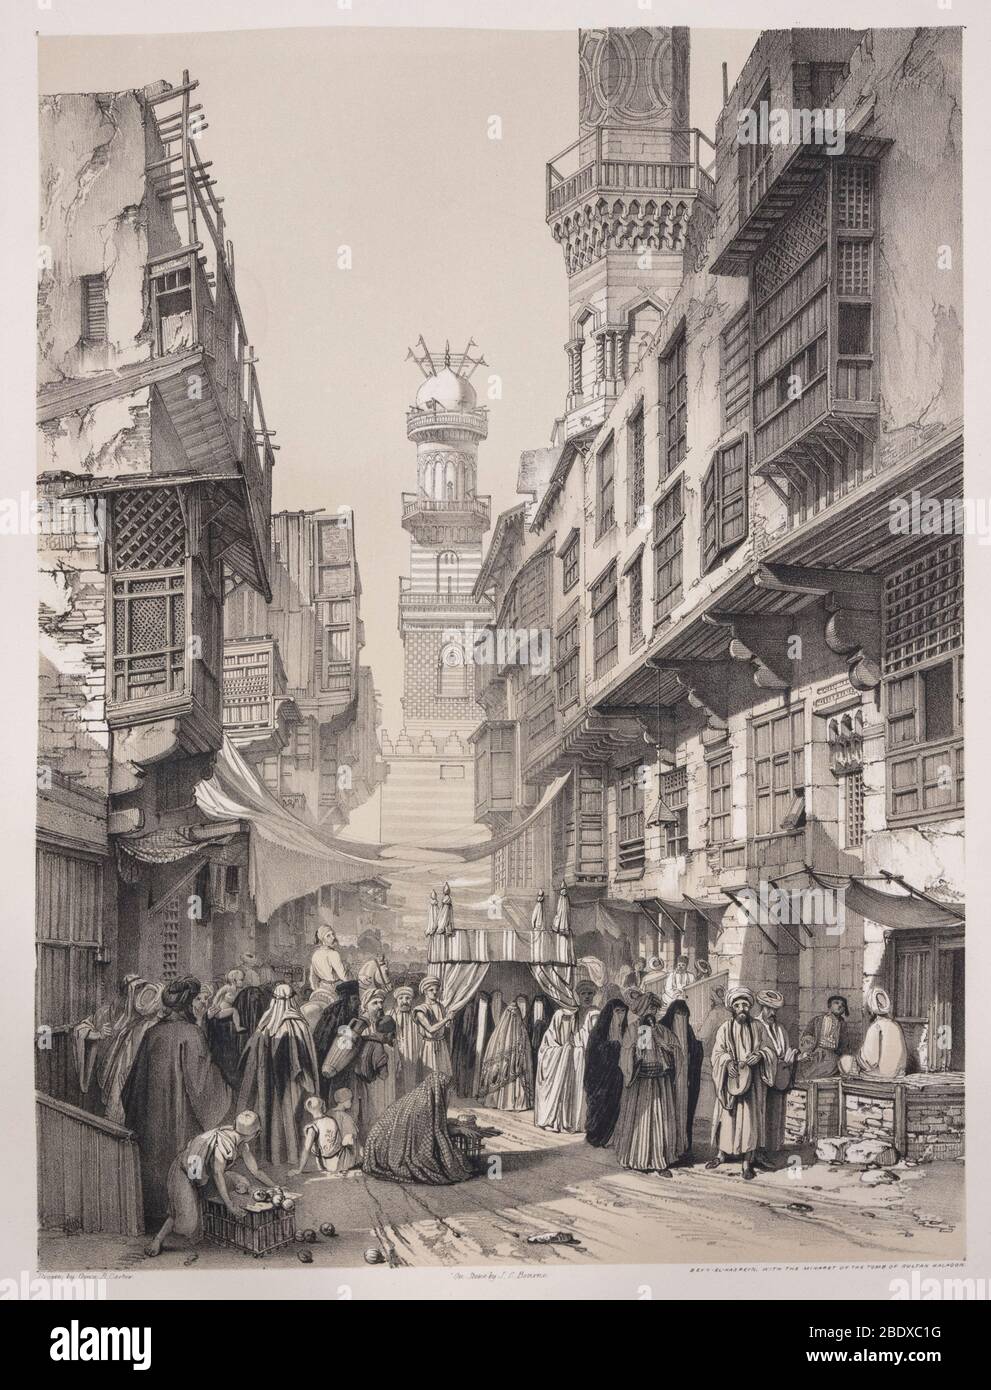 Beyn el-Kasreyn with the minaret of the tomb of Sultan Kalaoon, Robert Hay, Illustrations of Cairo, London, 1840 Stock Photo